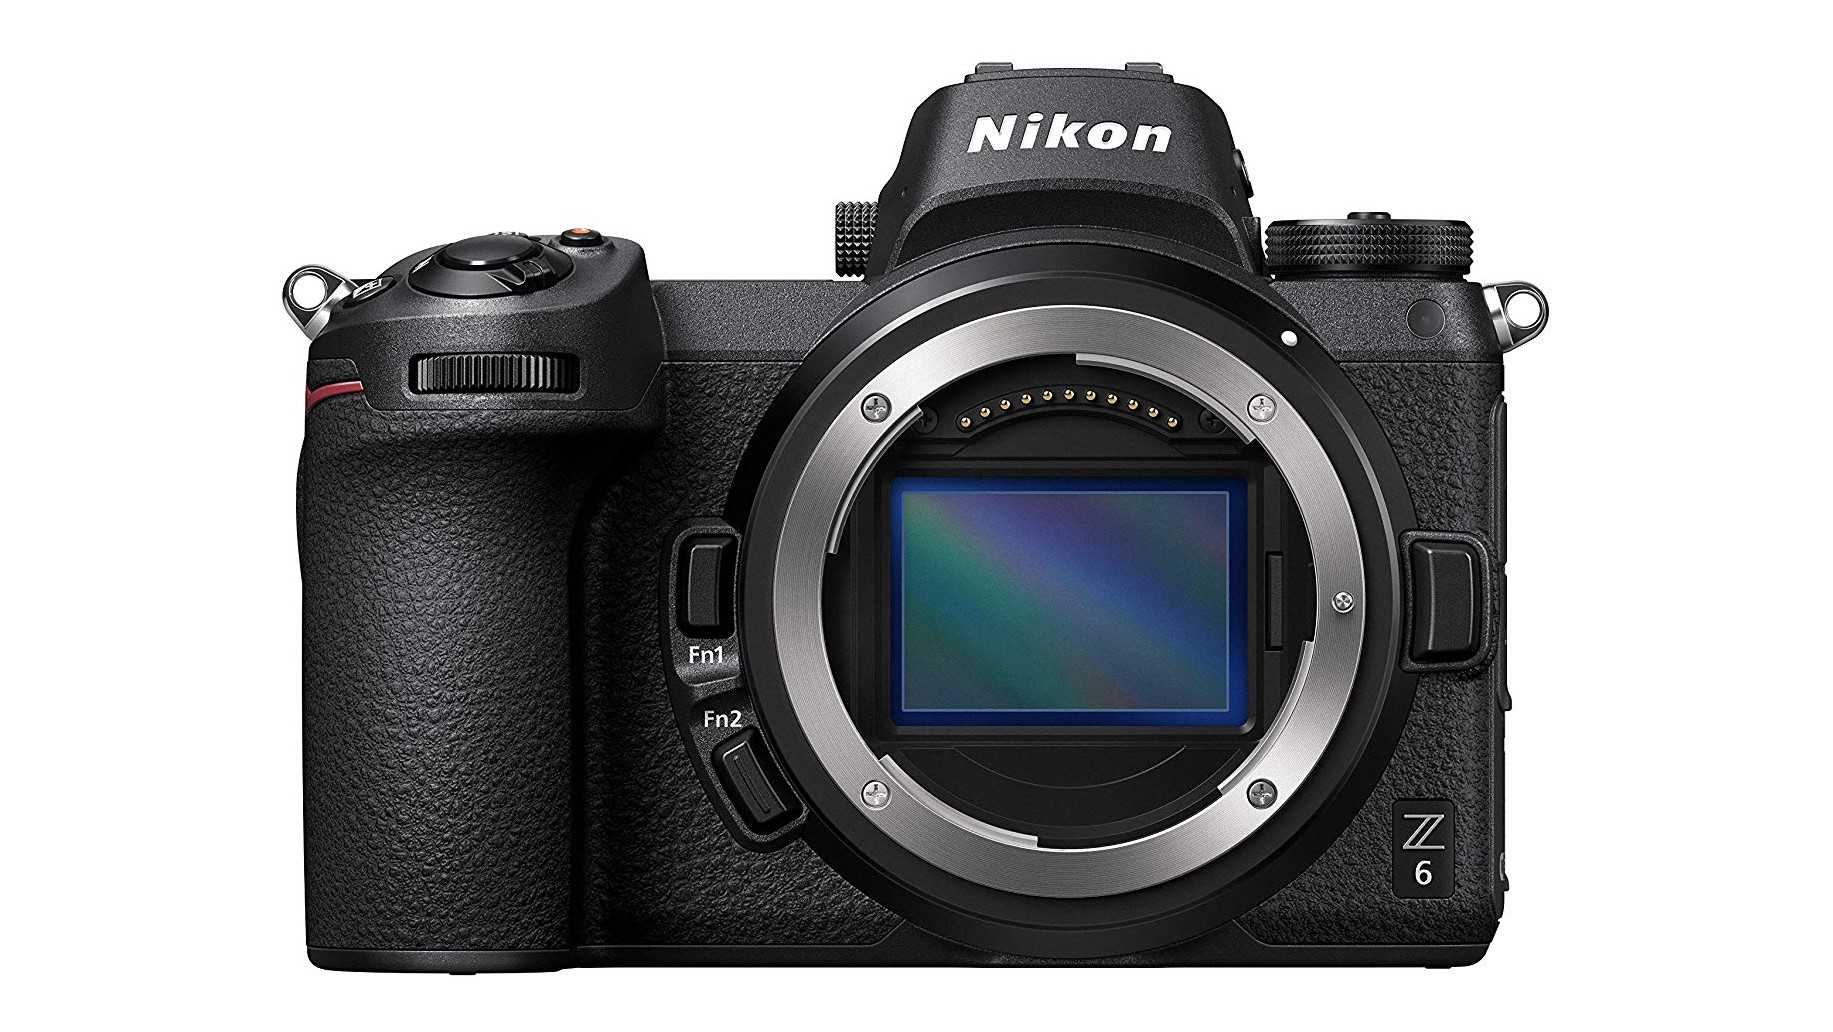 Nikon Z6 mirrorless camera body with no lens